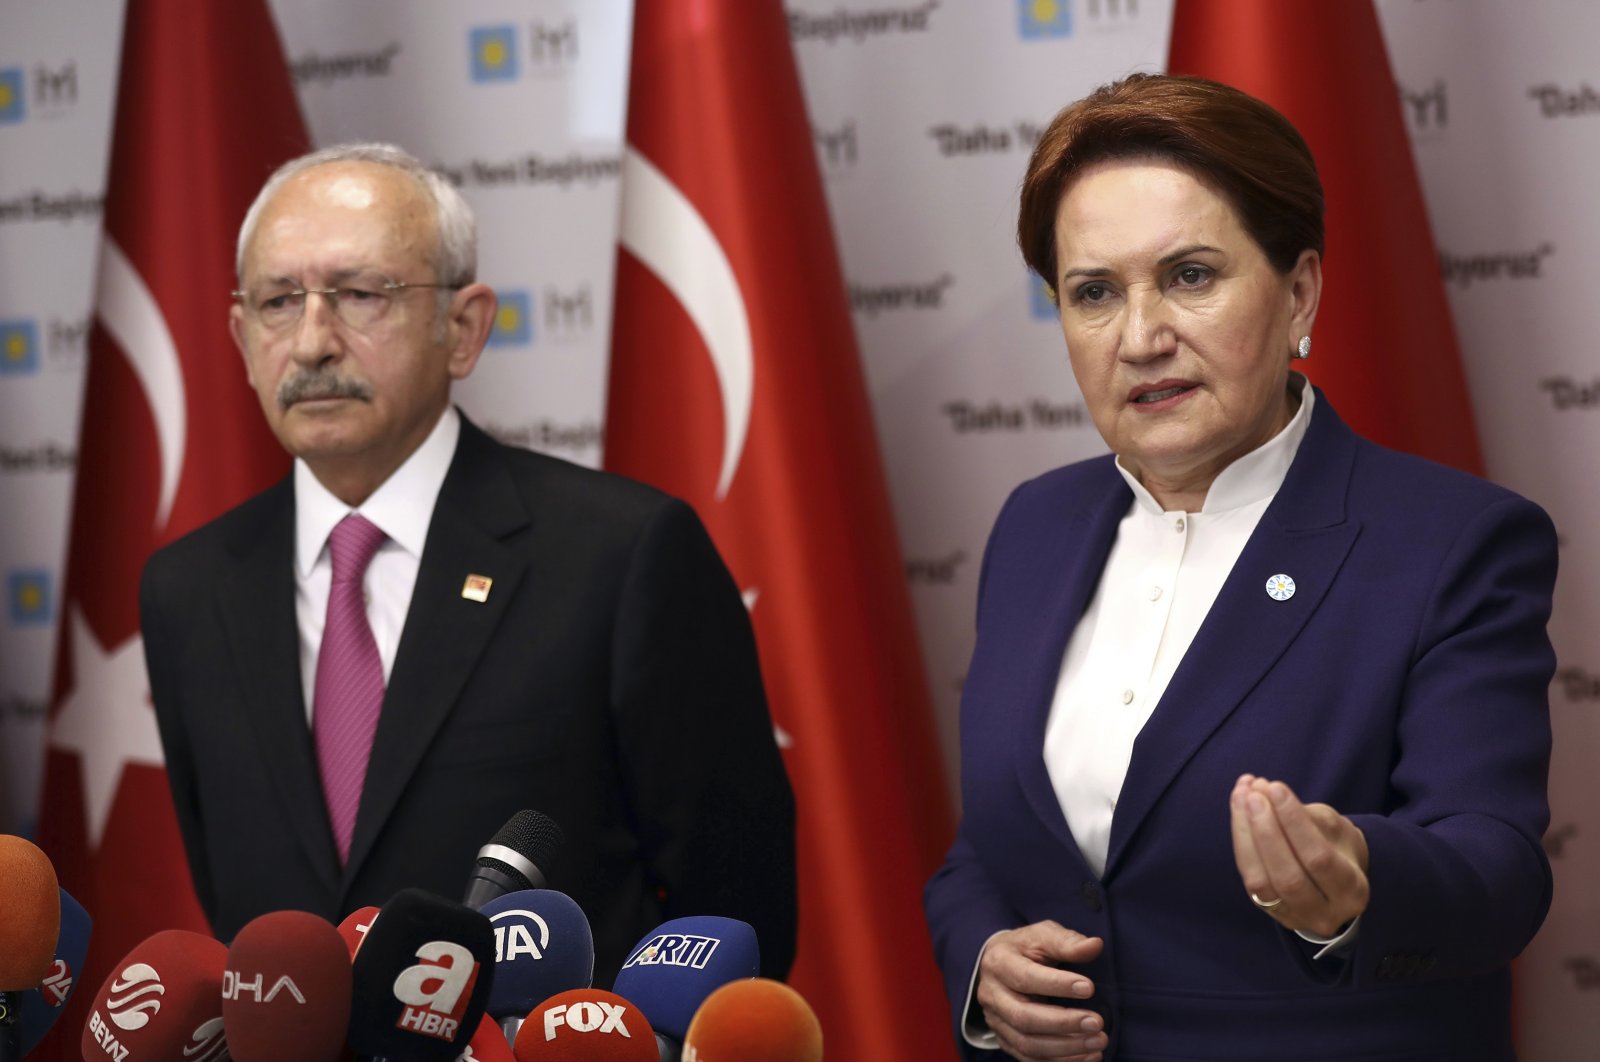 Turkey's main opposition leaders, Kemal Kılıçdaroğlu (L) and Meral Akşener (R), speak to the media in Ankara, Turkey, April 8, 2019. (AP File Photo)